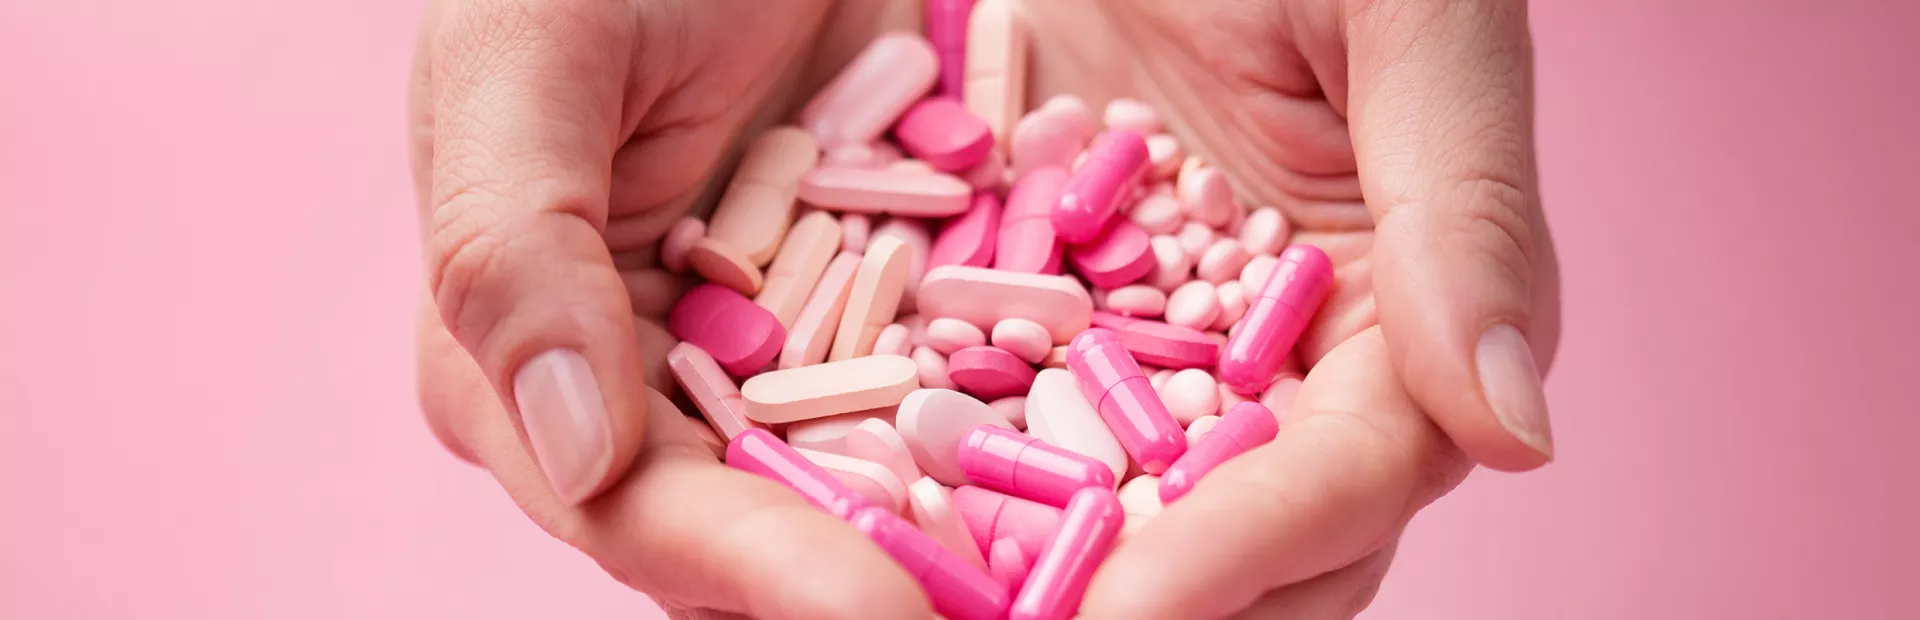 manos sujetando pastillas rosas